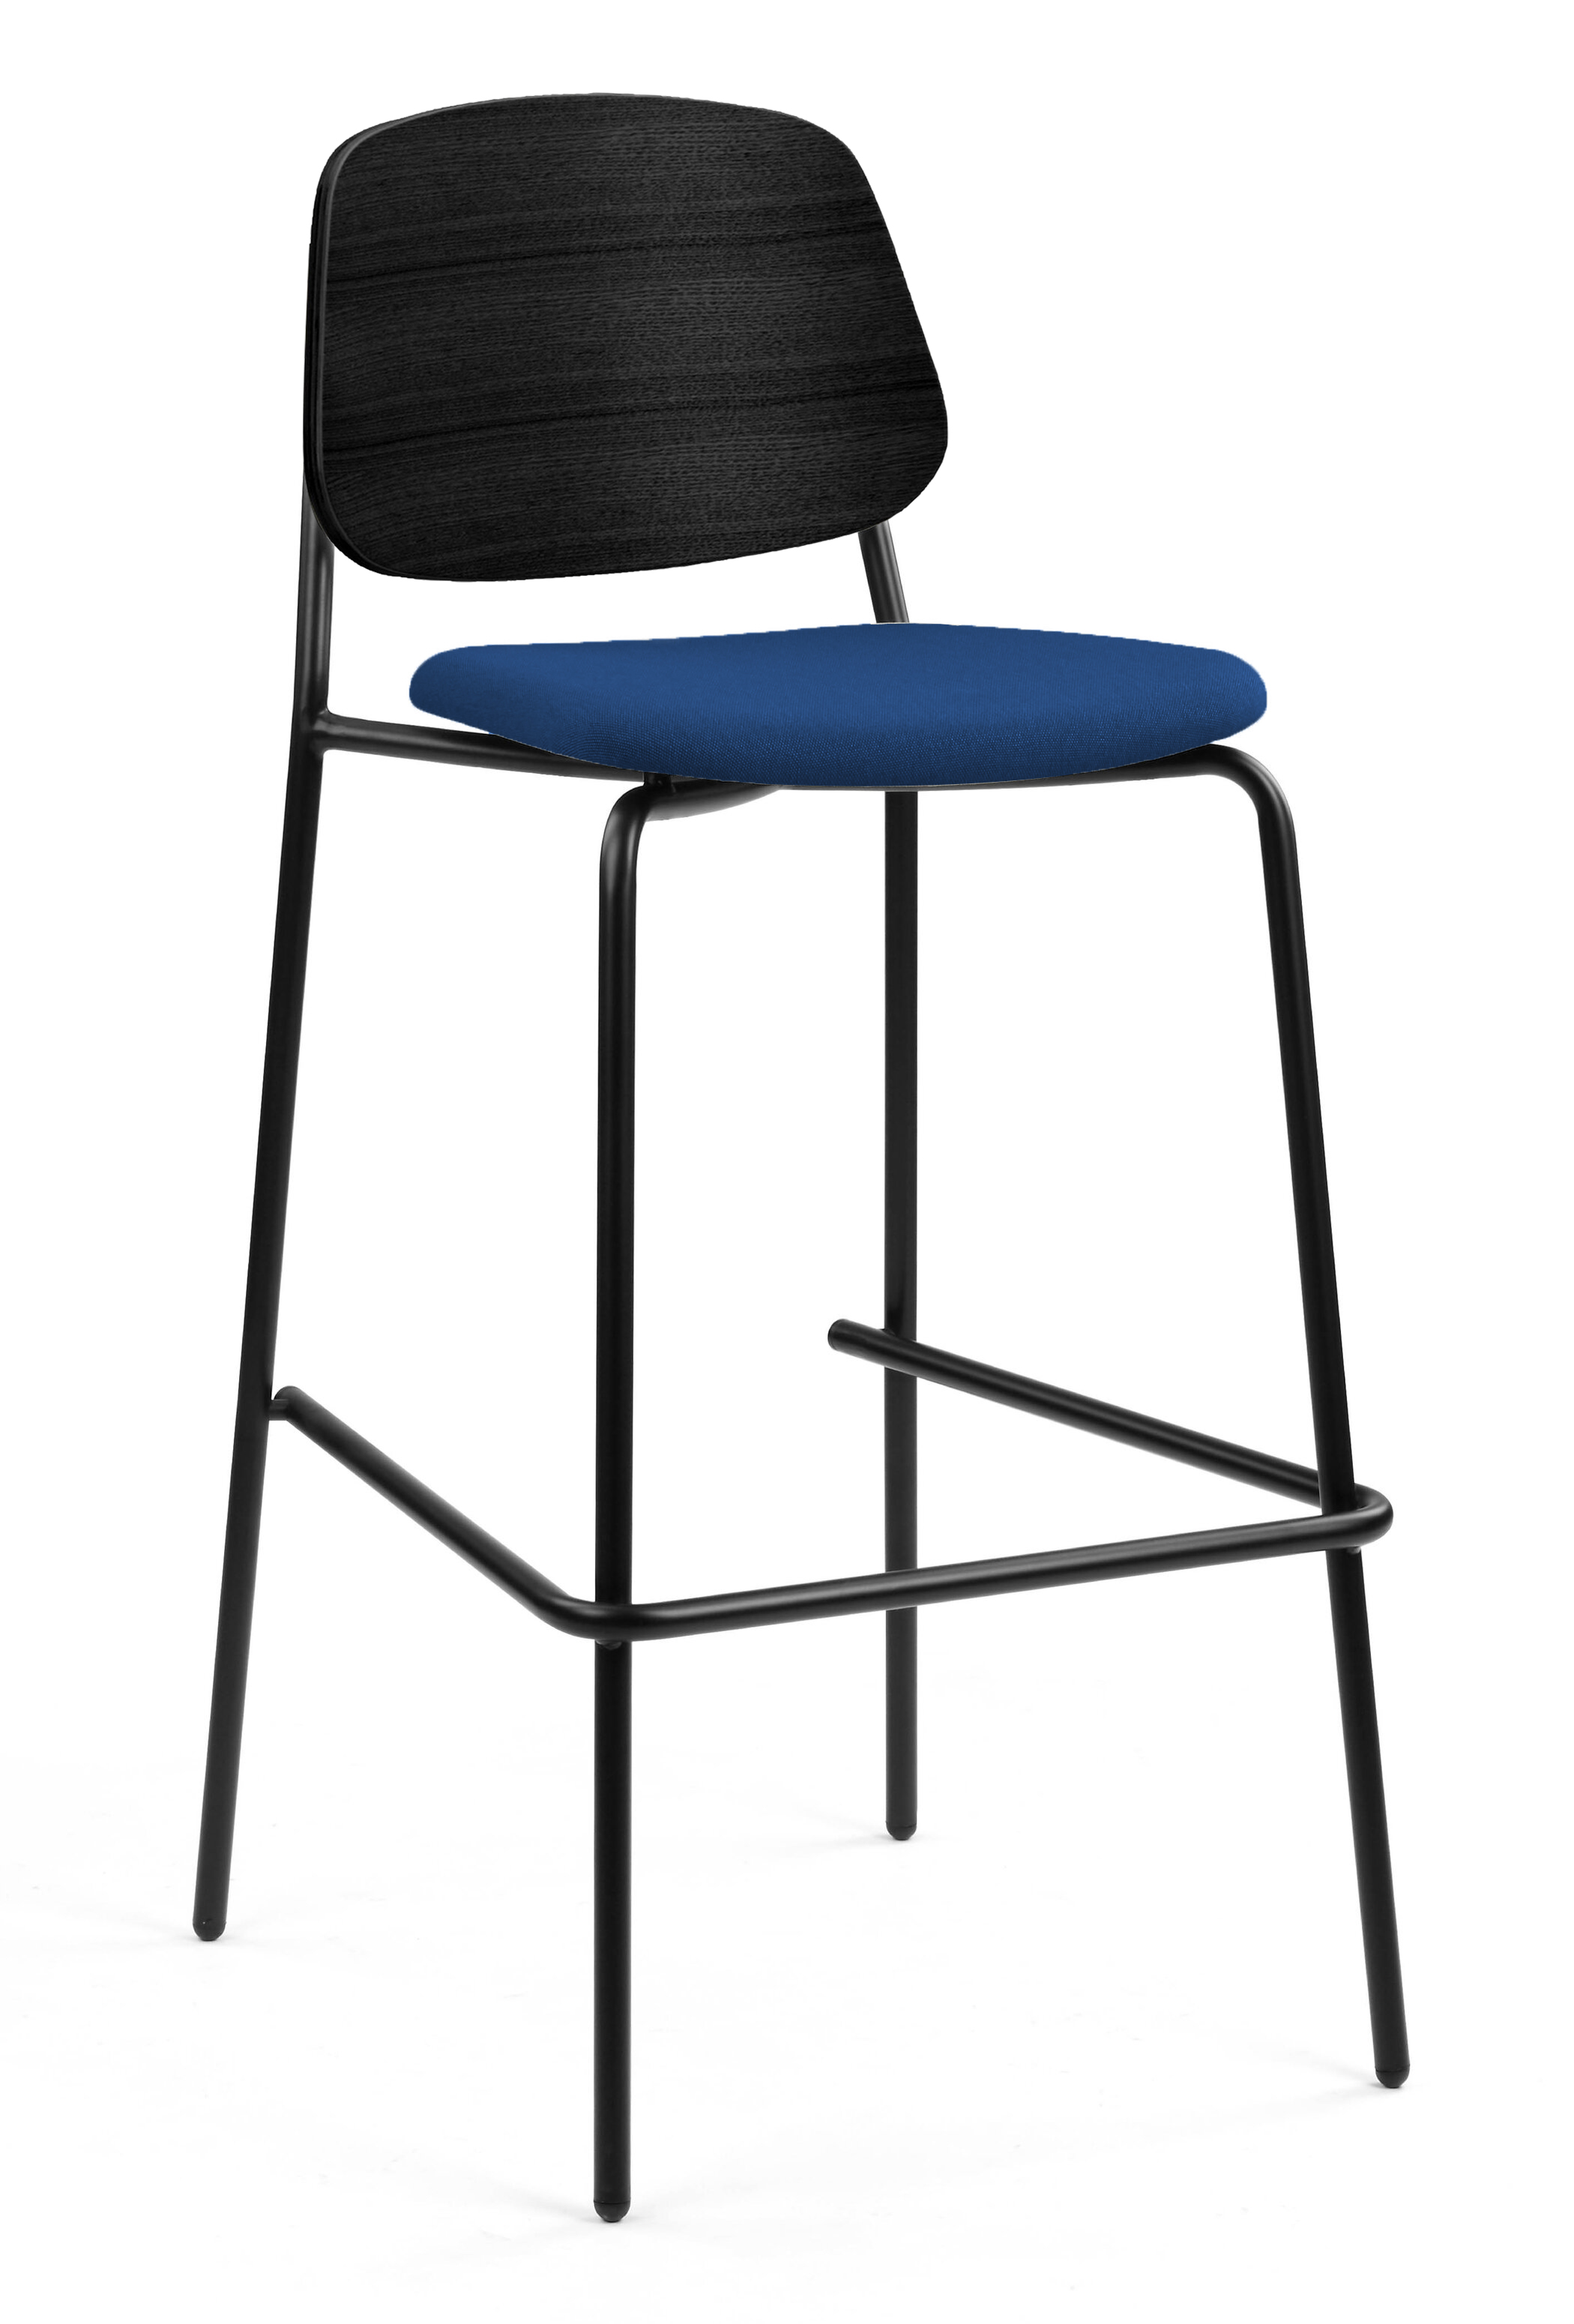 WS - Platform high stool - Black back, ERA CSE40 MATURITY seat